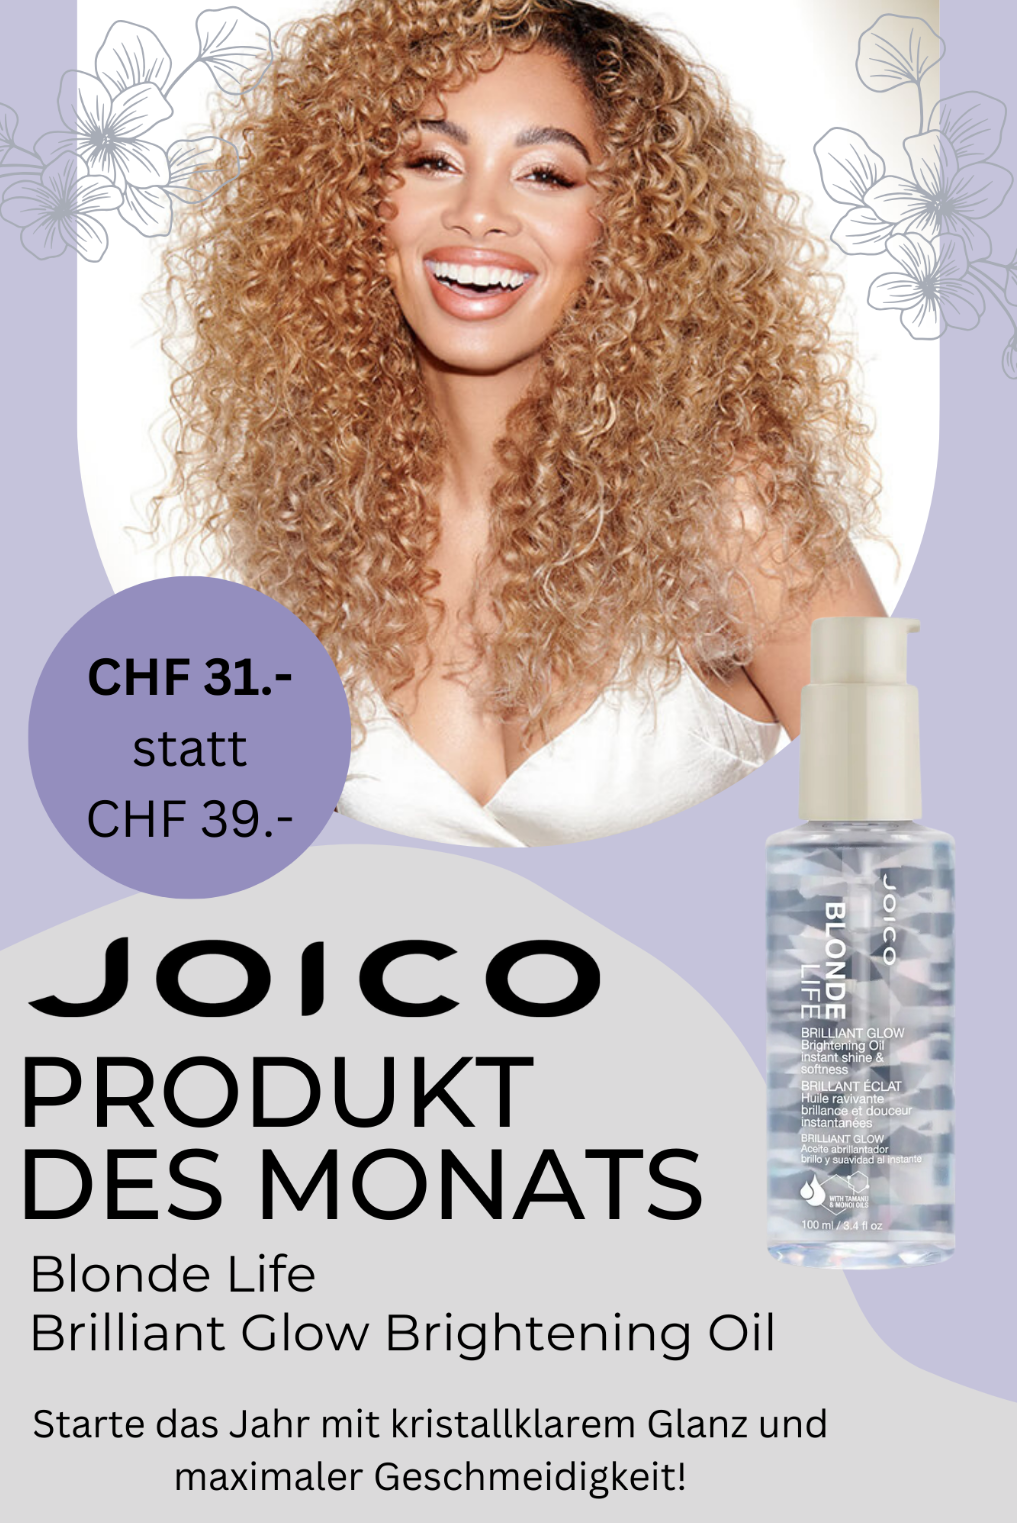 Joico Blonde Life Brilliant Glow Brightening Oil Produkt des Monats 3+2